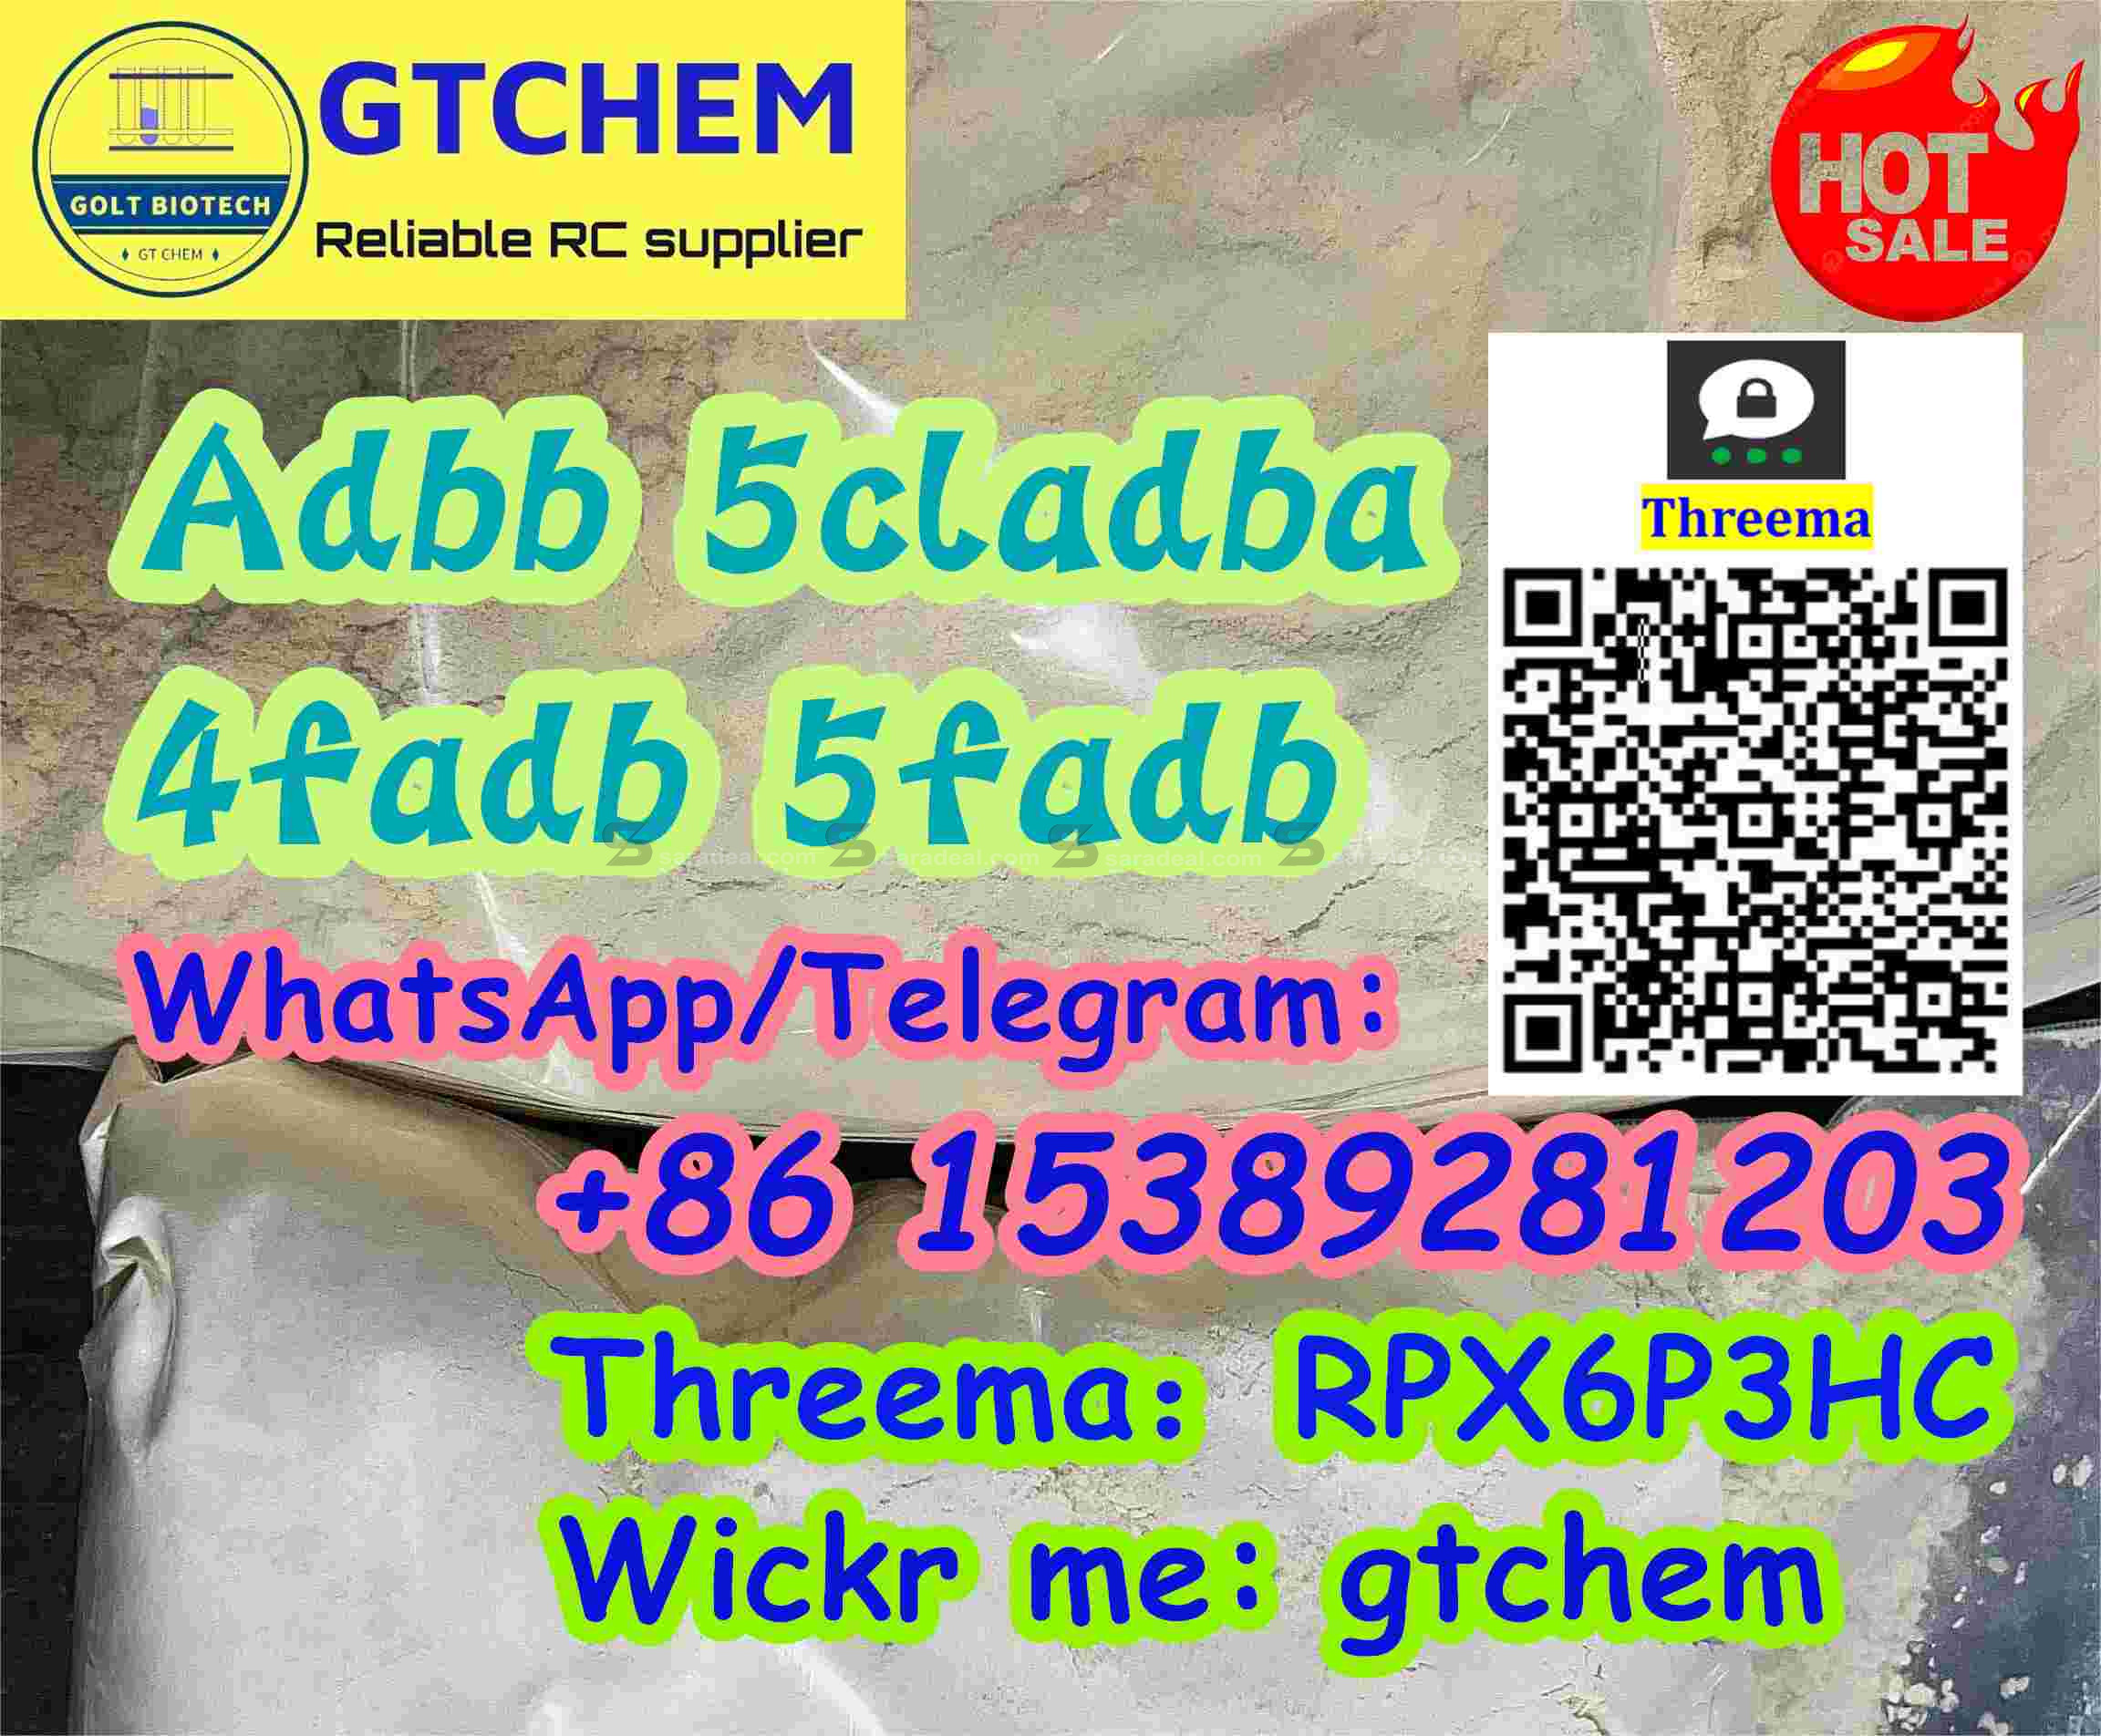 adbb precursor adb-butinaca 5cladba raw materials